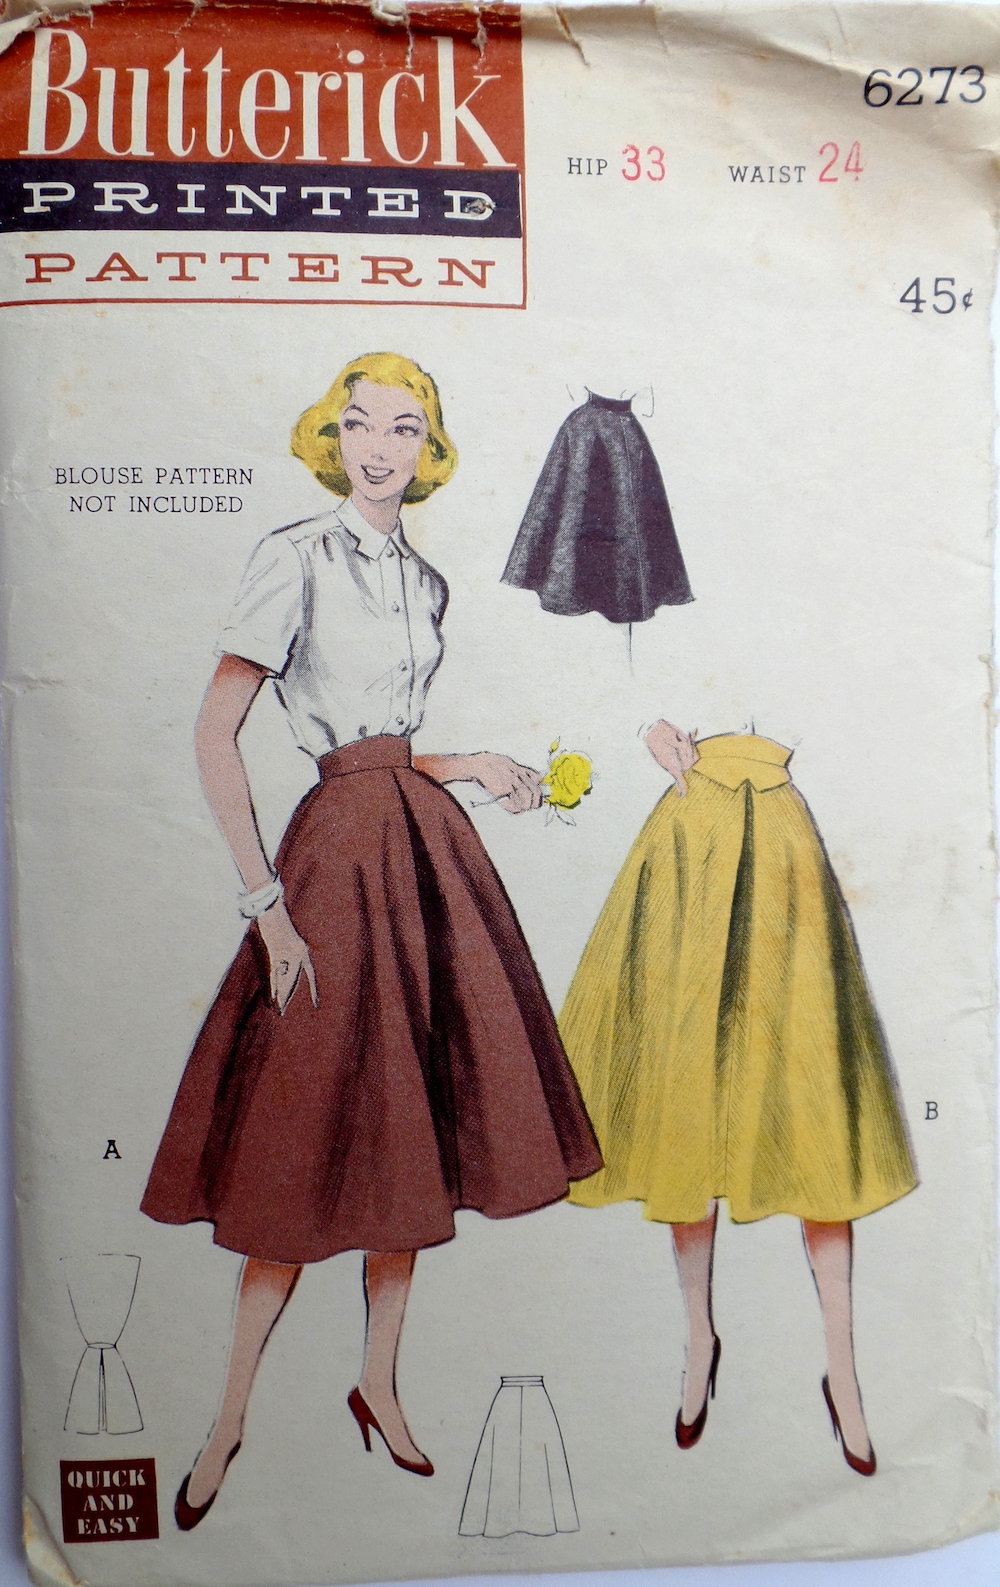 Natalie - Gored Skirt (PDF pattern) - Forget-me-not Patterns